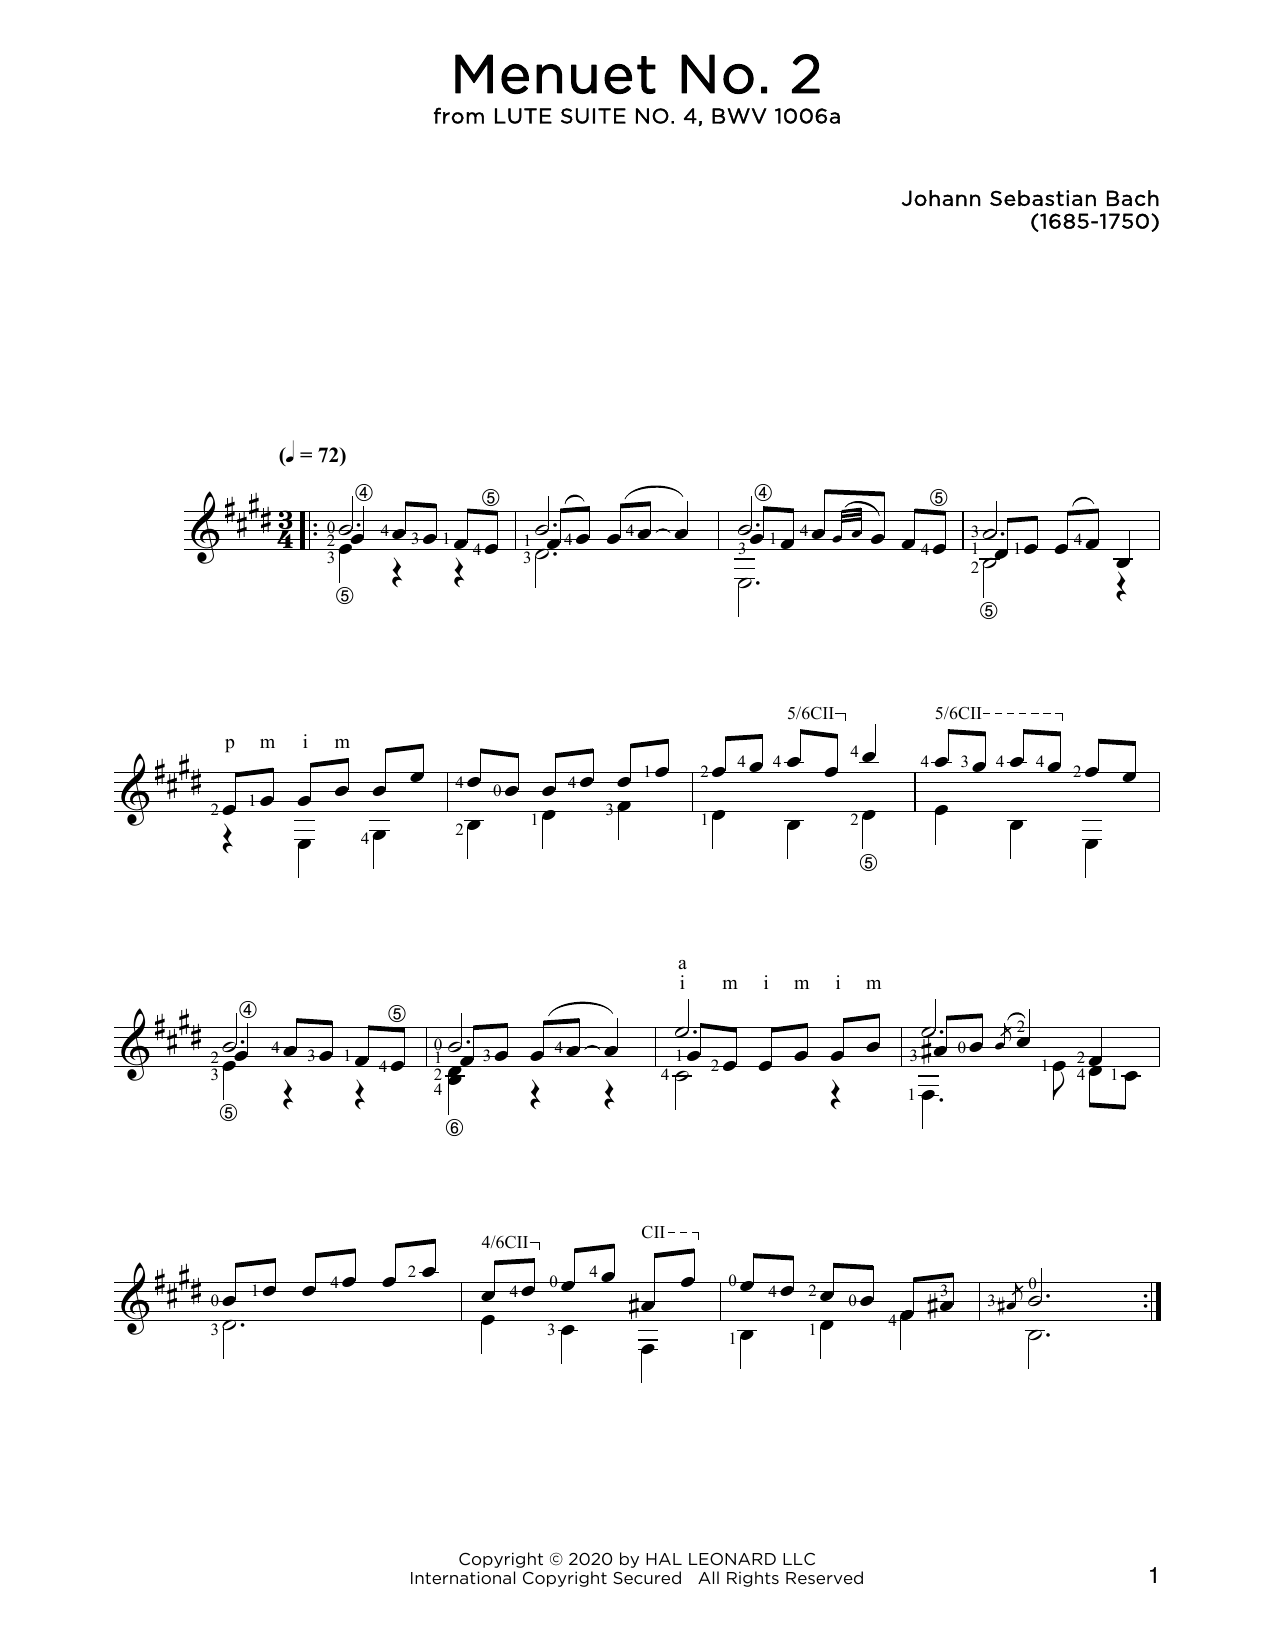 Johann Sebastian Bach Menuet No. 2 sheet music notes and chords arranged for Solo Guitar